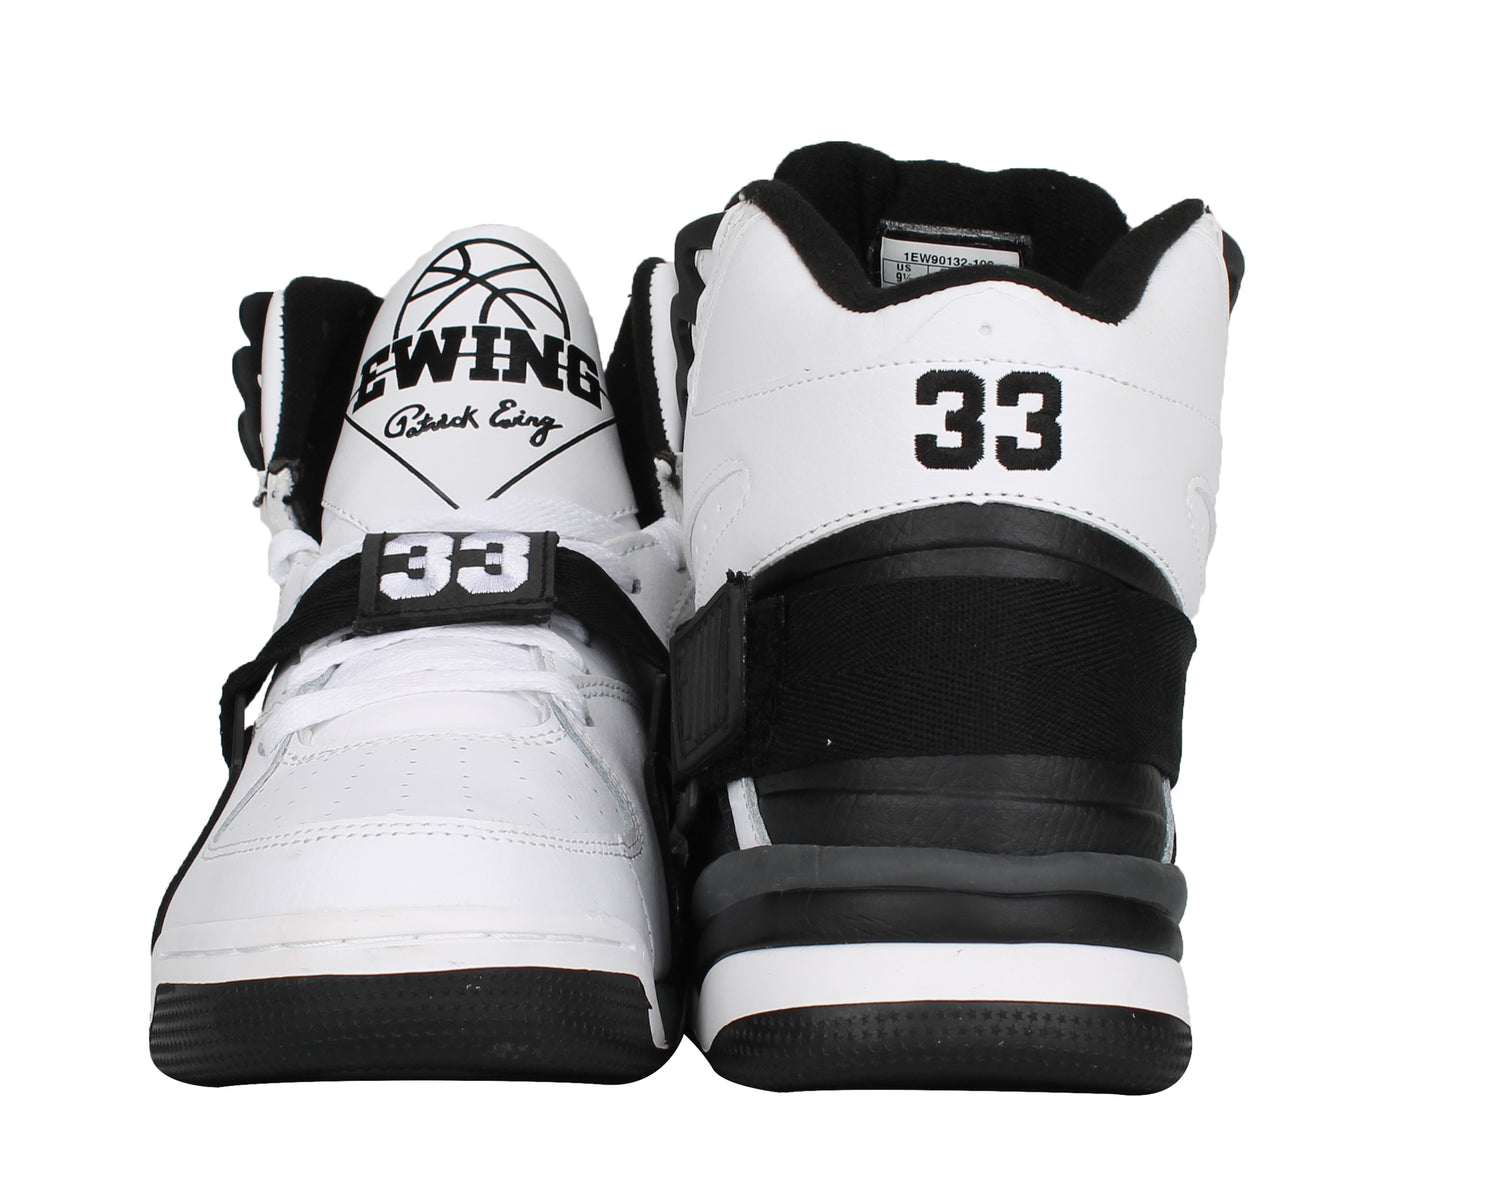 Ewing Athletics Ewing Concept Hi Men's Basketball Shoes